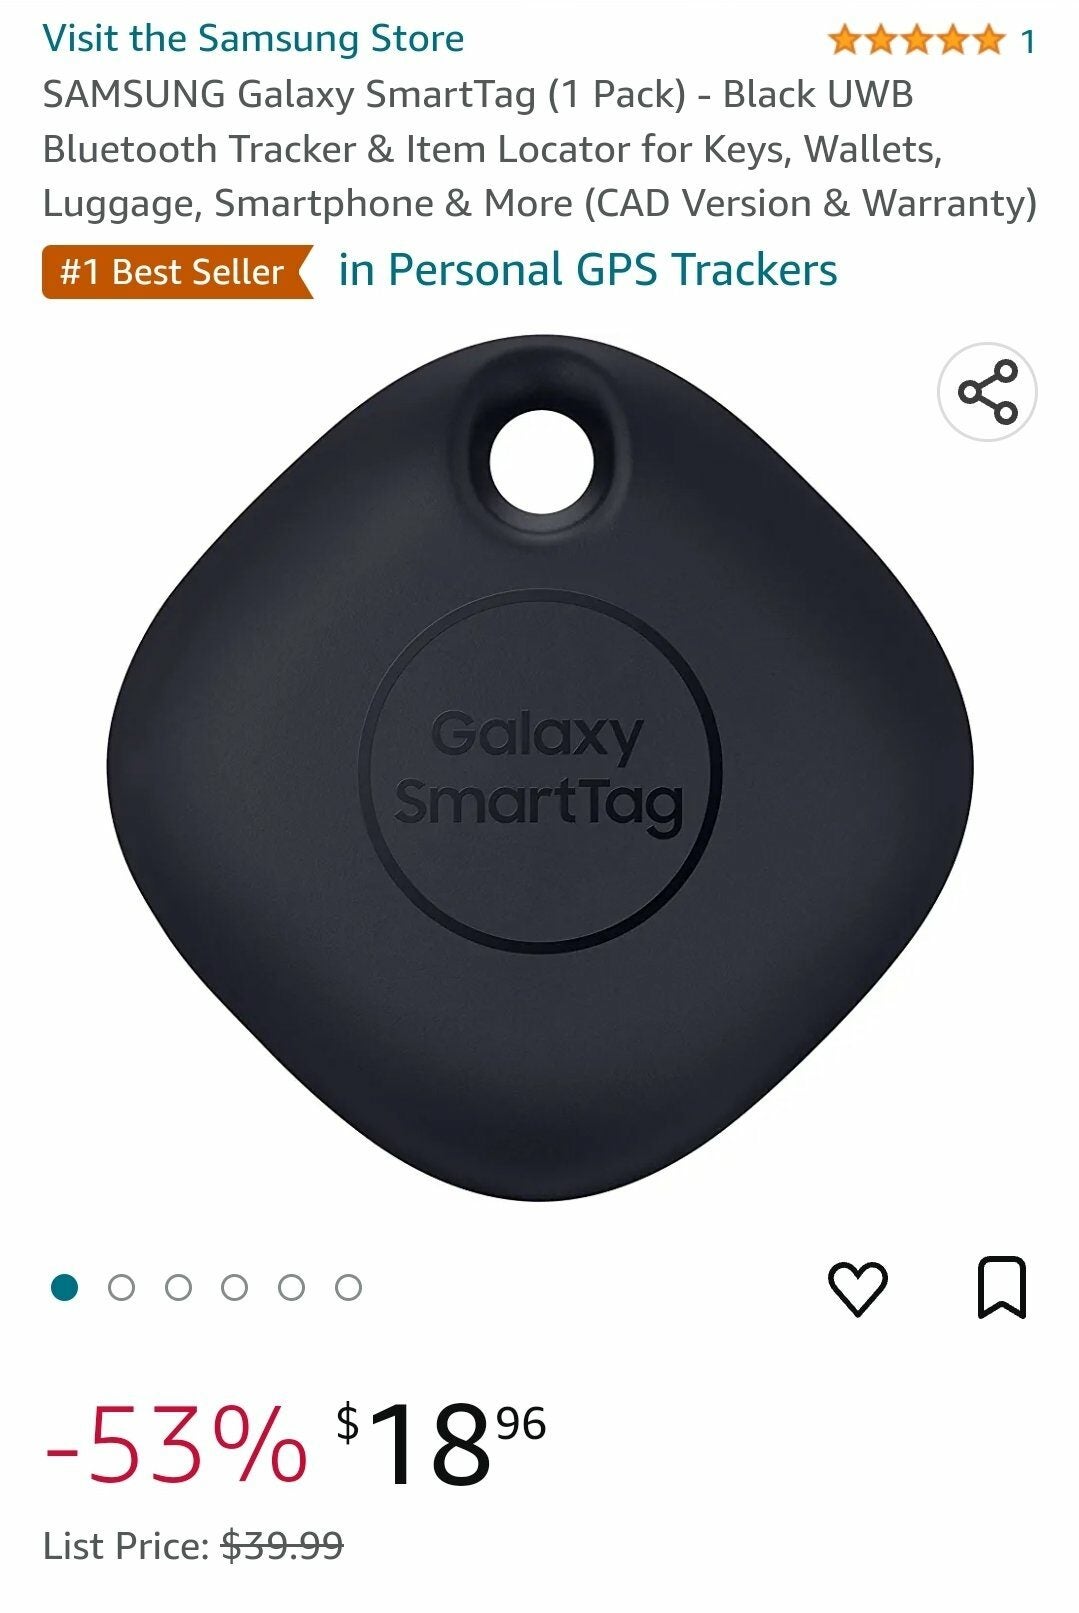 Best Buy] Samsung Galaxy SmartTag Bluetooth Item Tracker - Black